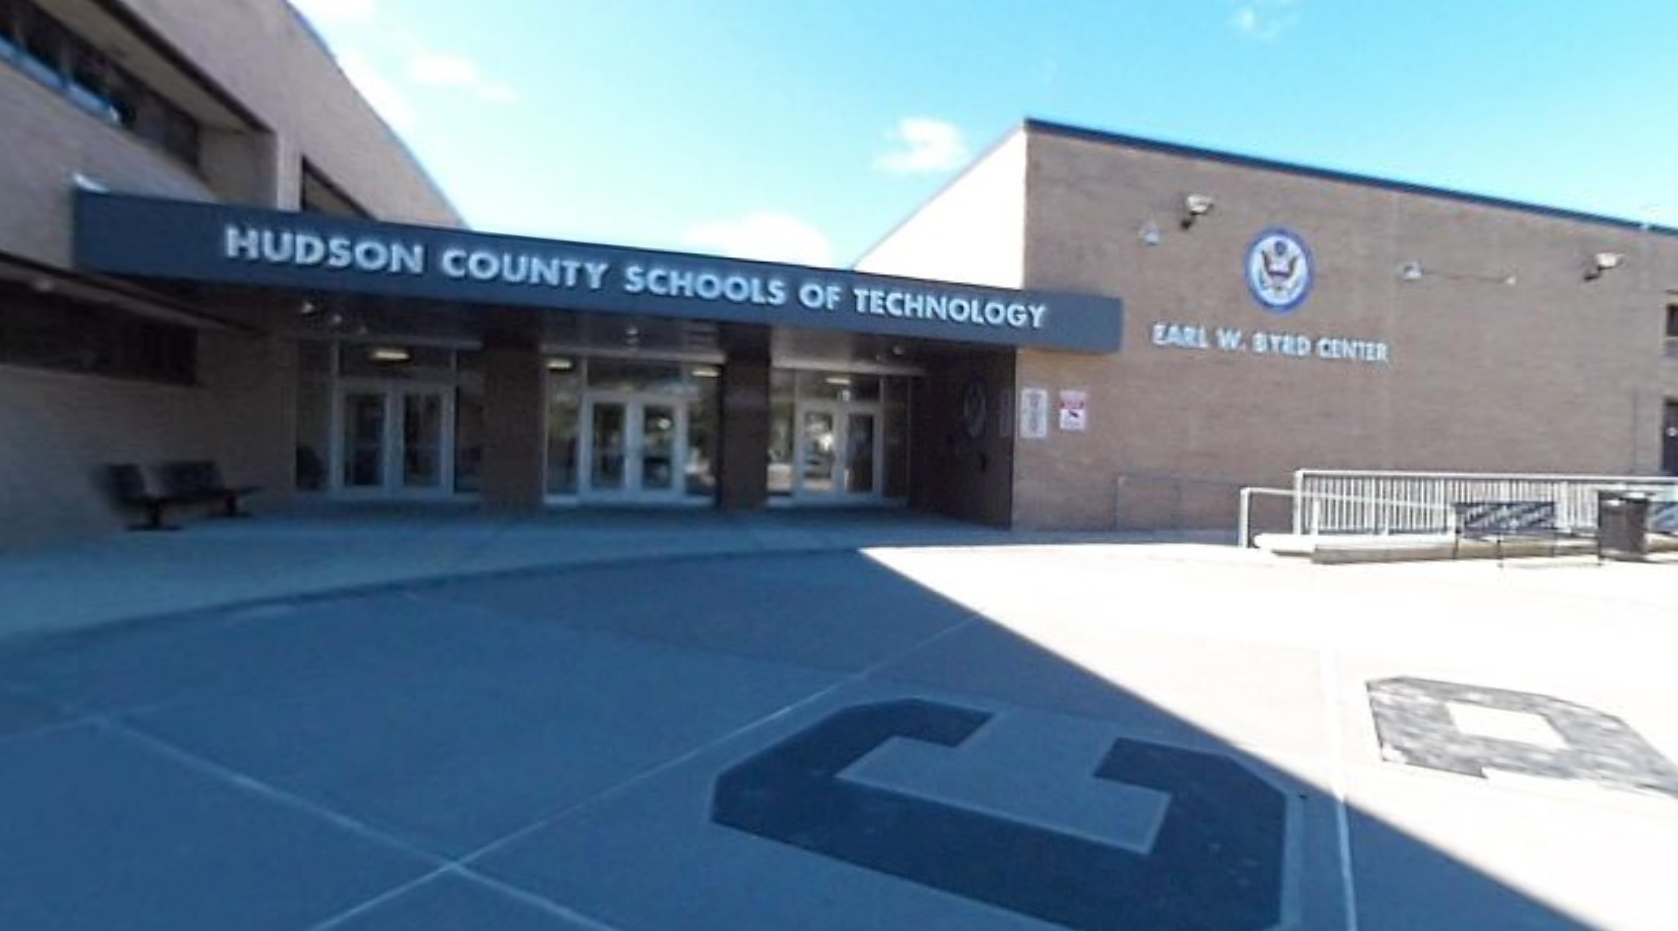 High Tech High School – Hudson County Schools of Technology